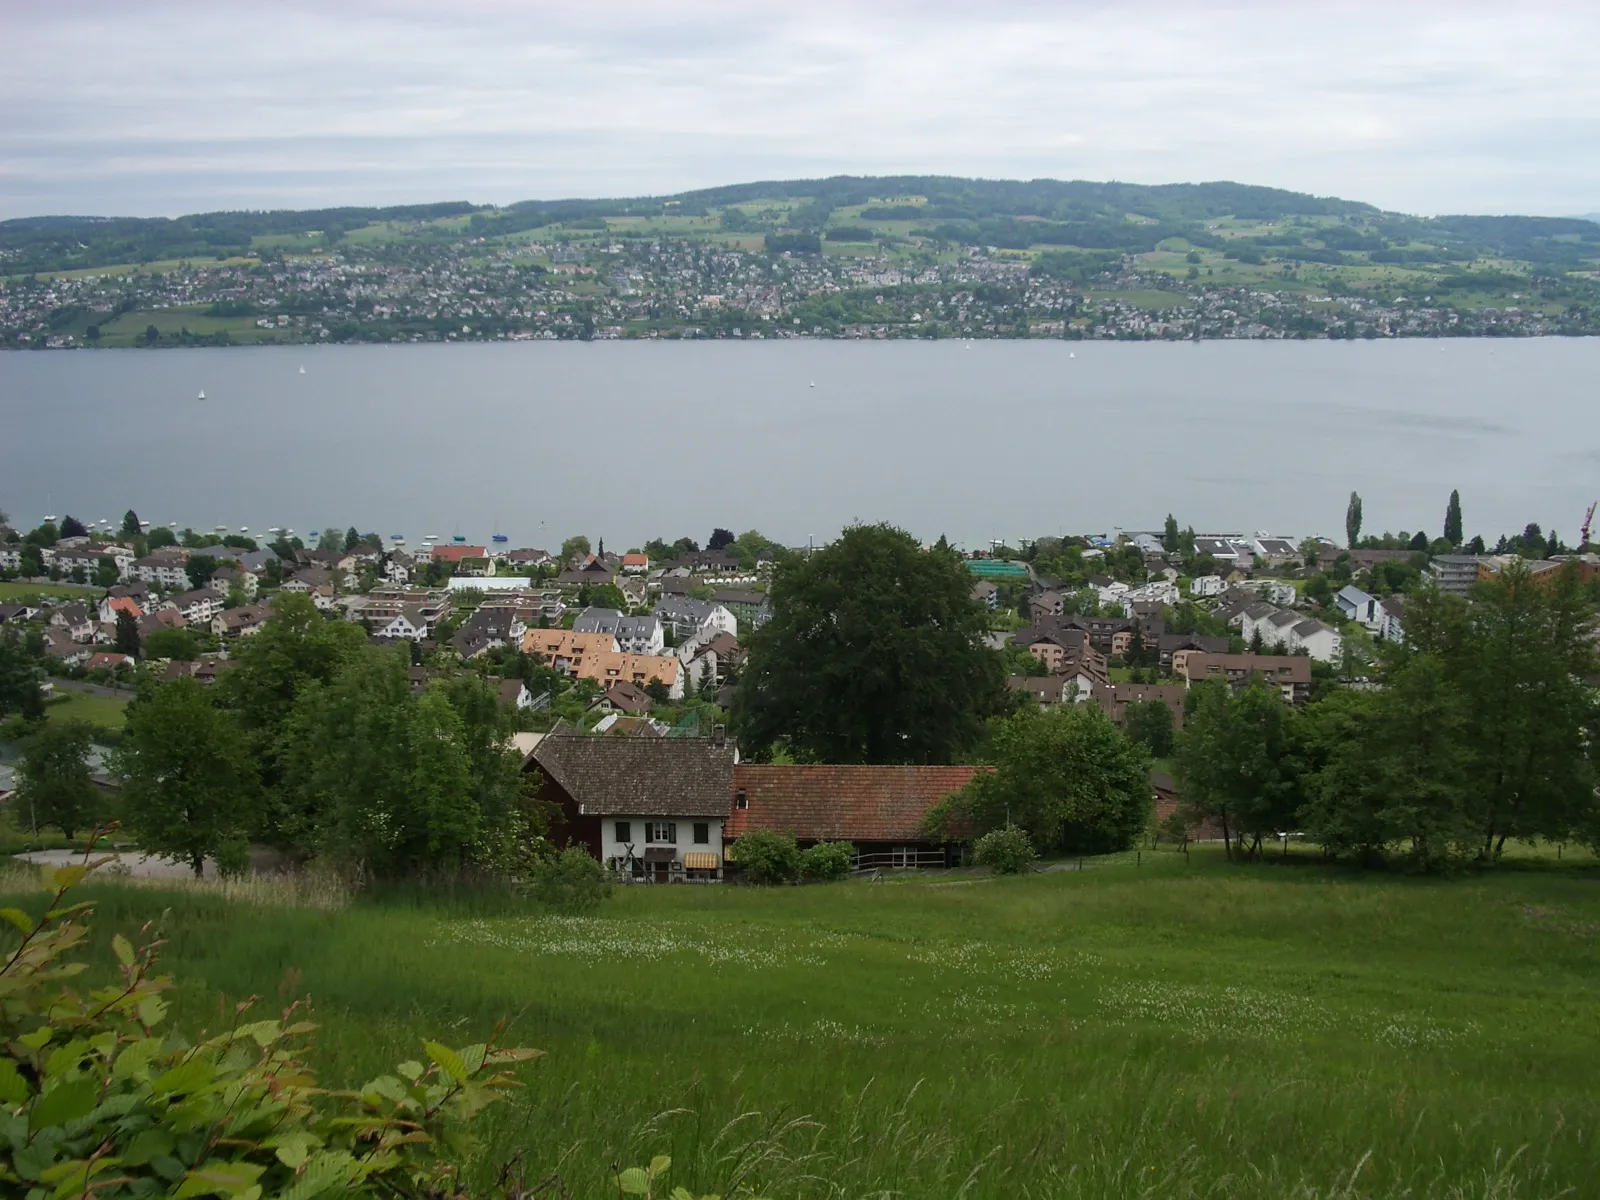 Obrázok Zürich